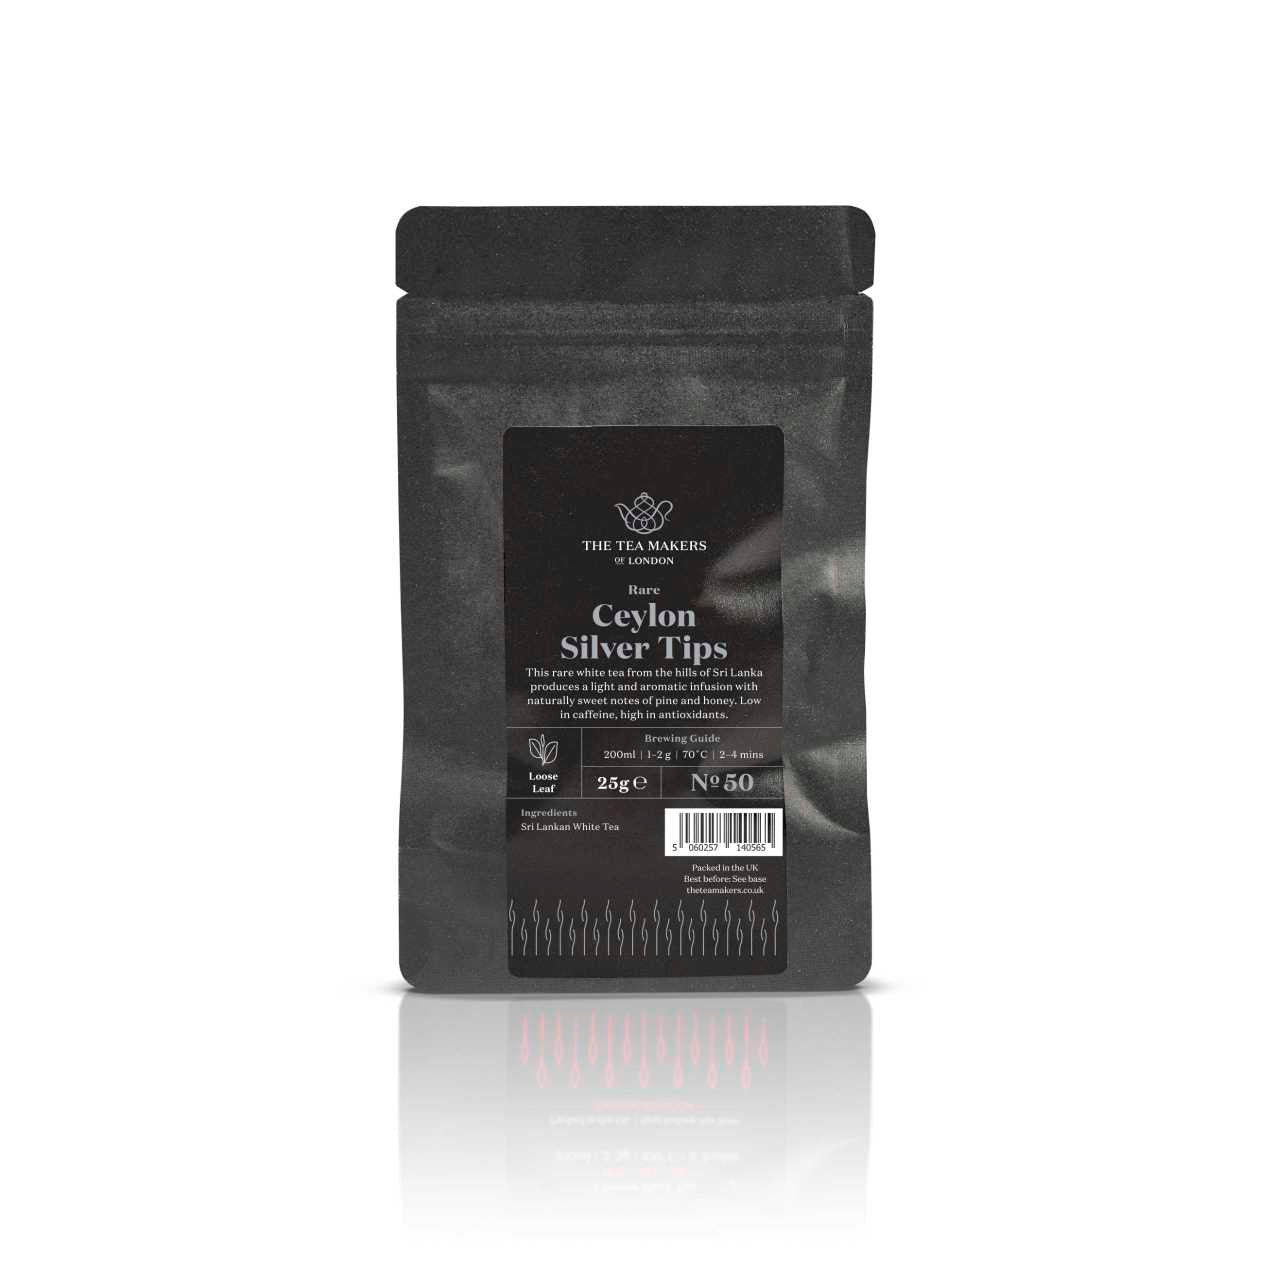 Rare Ceylon Silver Tips Loose Leaf Tea 25g Pack